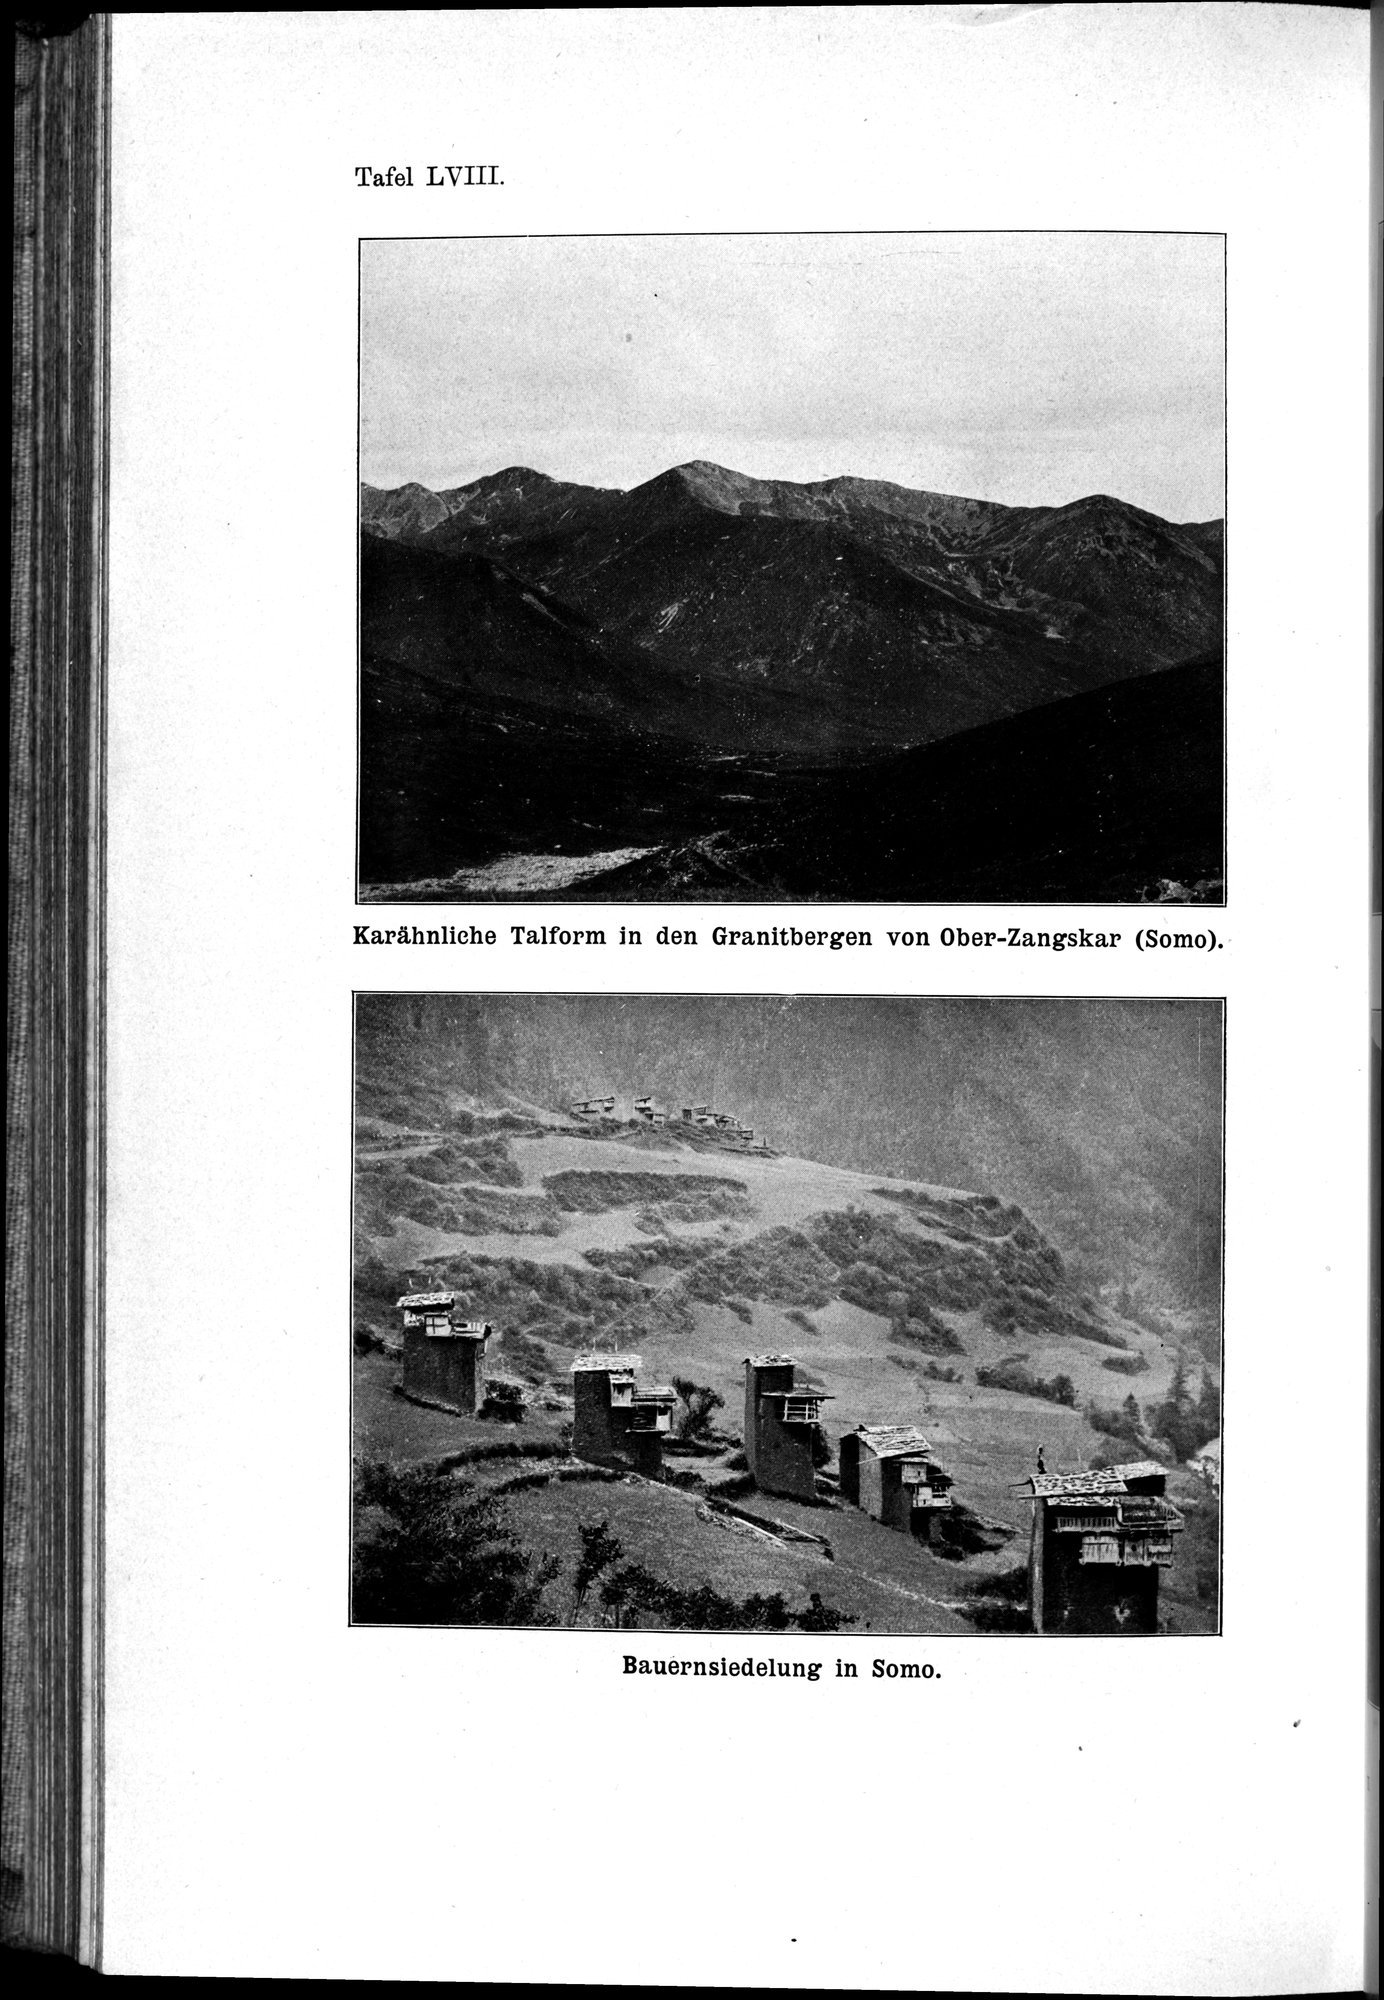 Meine Tibetreise : vol.2 / Page 308 (Grayscale High Resolution Image)